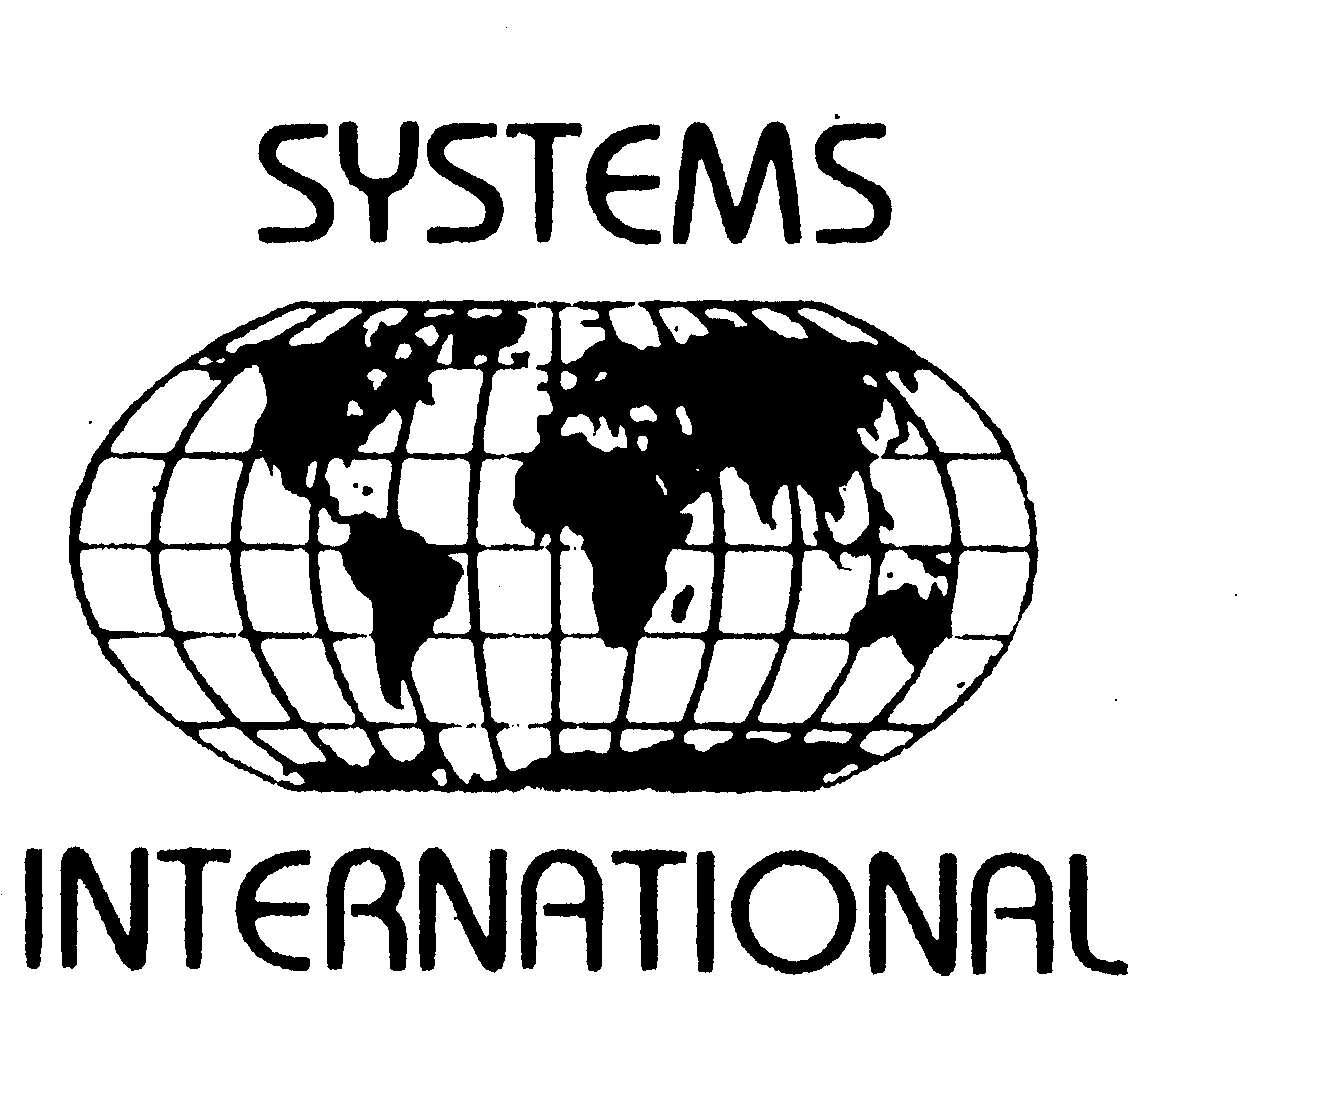  SYSTEMS INTERNATIONAL